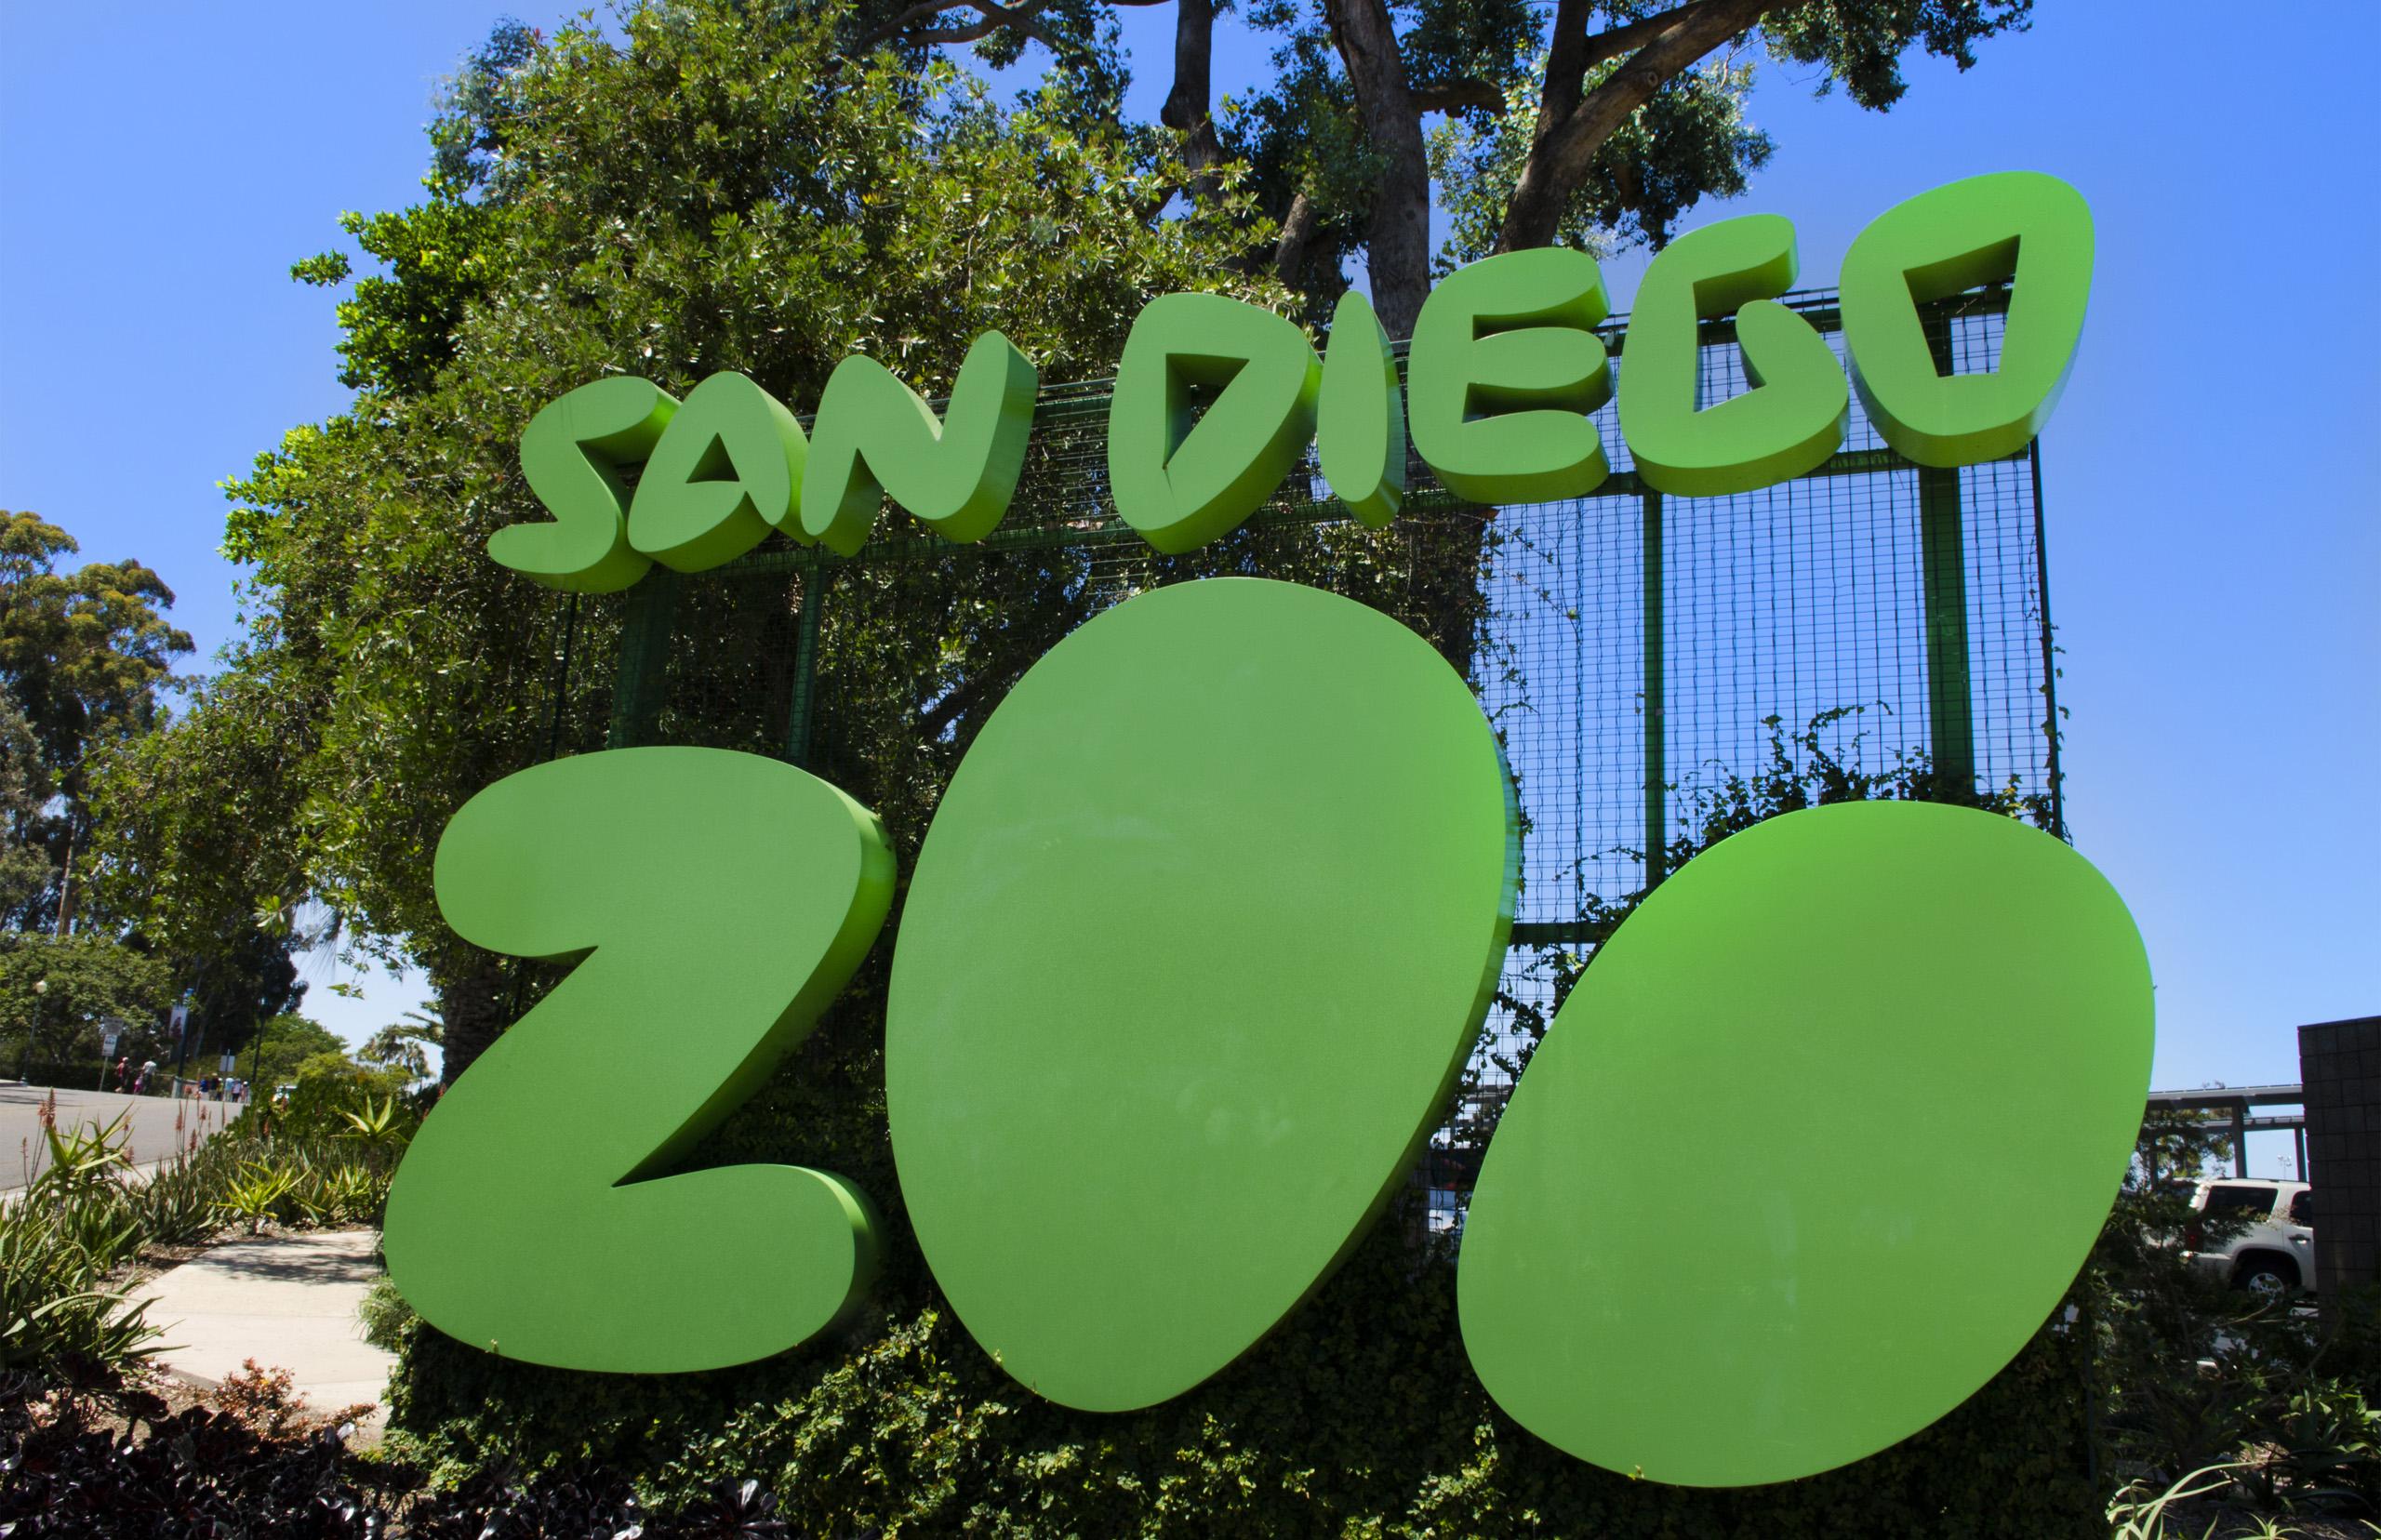 san-diego-zoo